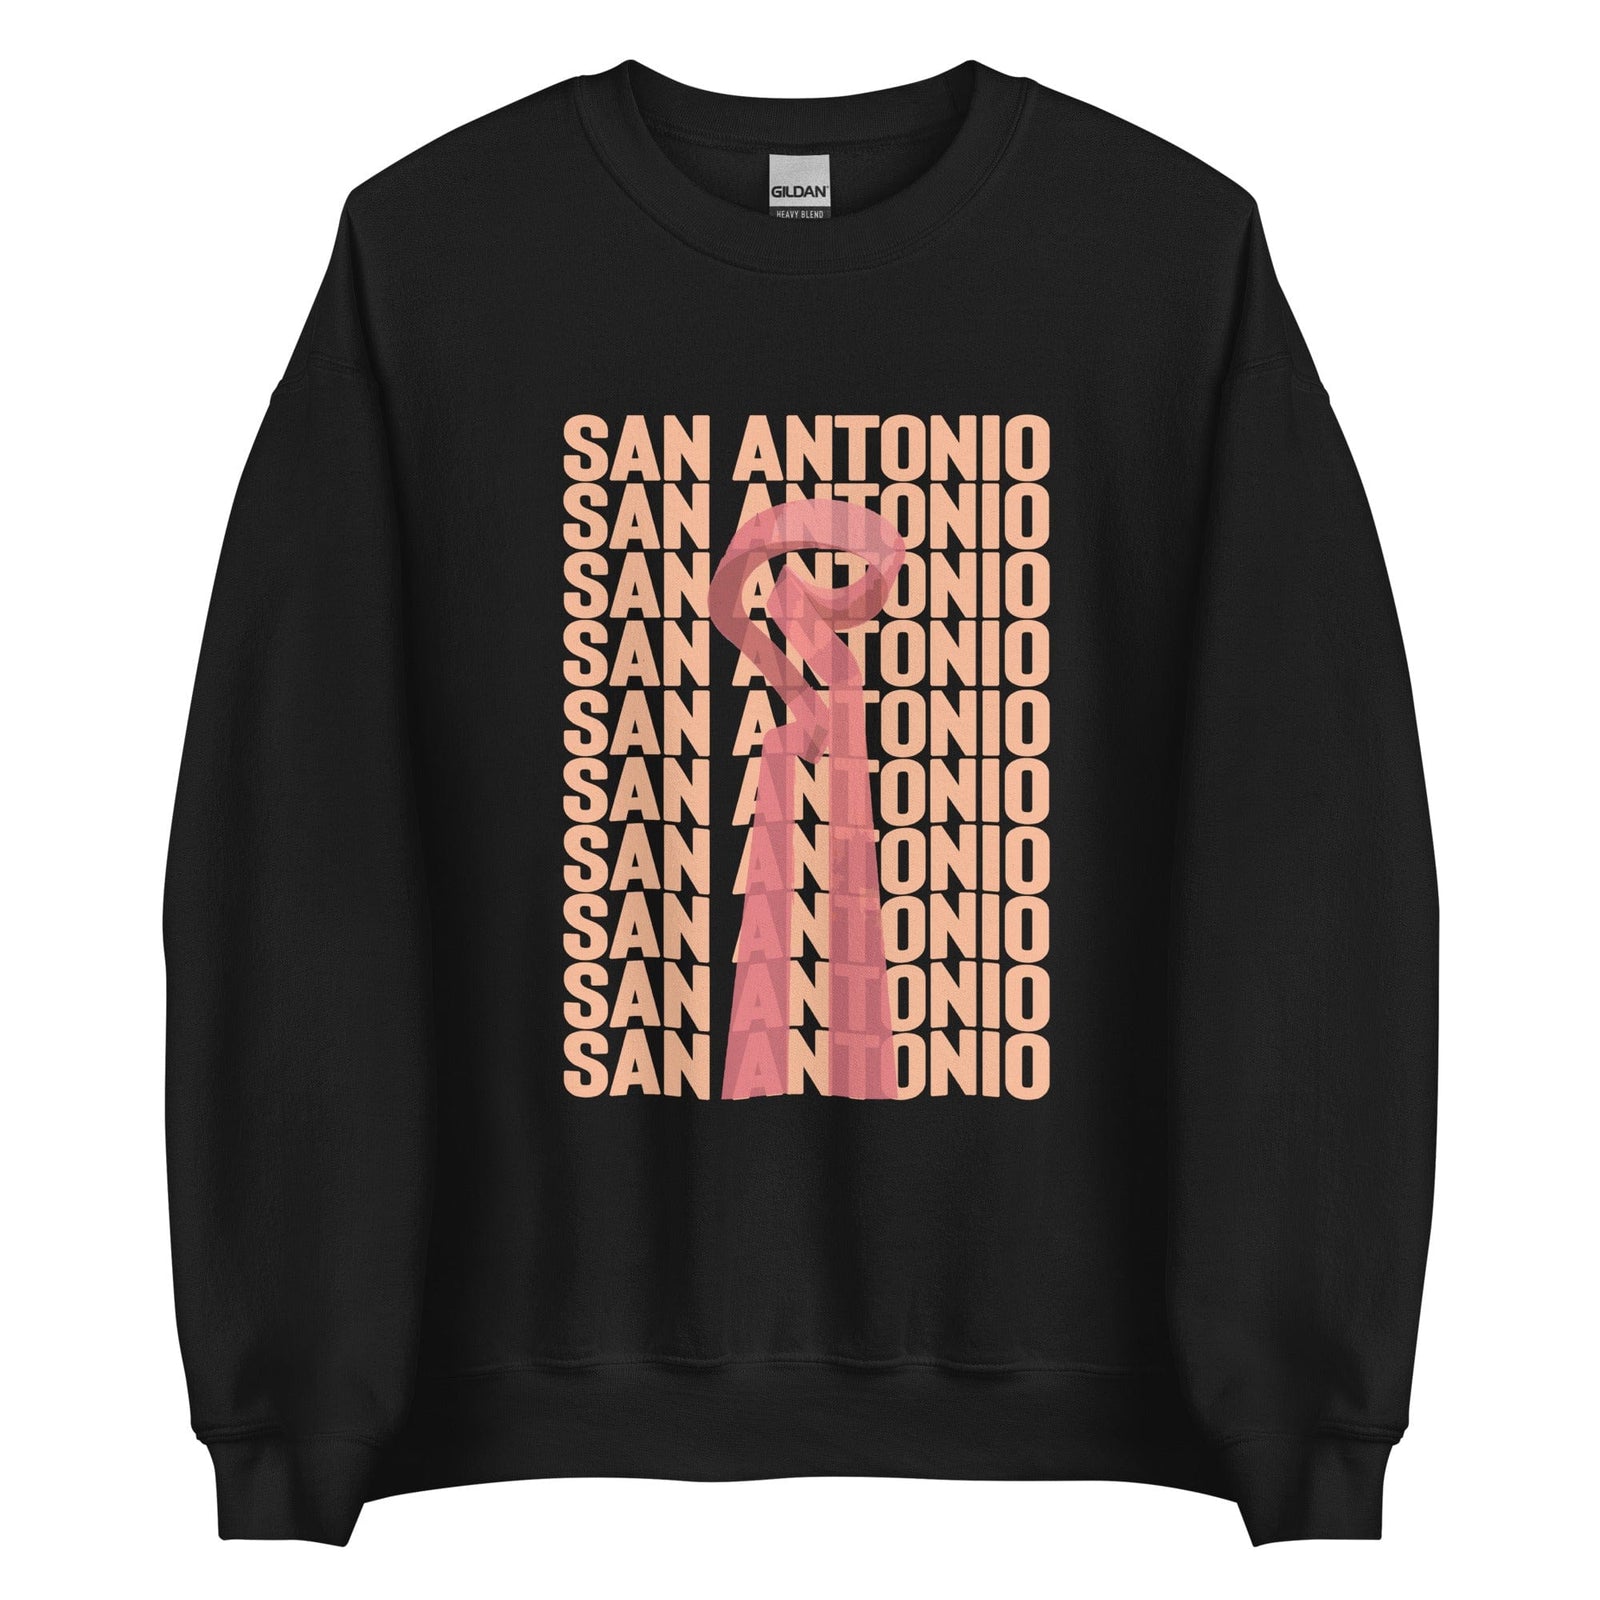 City Shirt Co San Antonio Repeat Sweatshirt Black / S